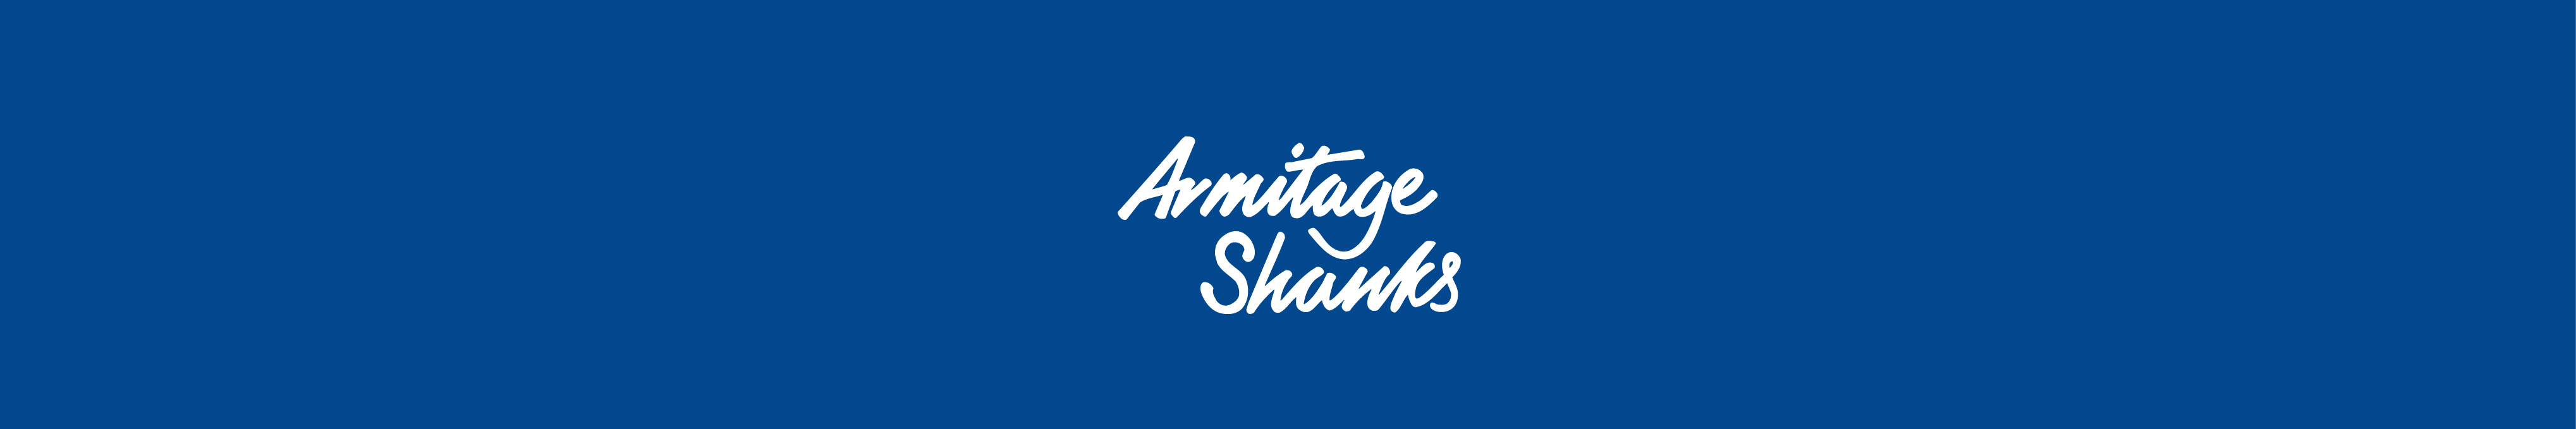 Armitage shanks header